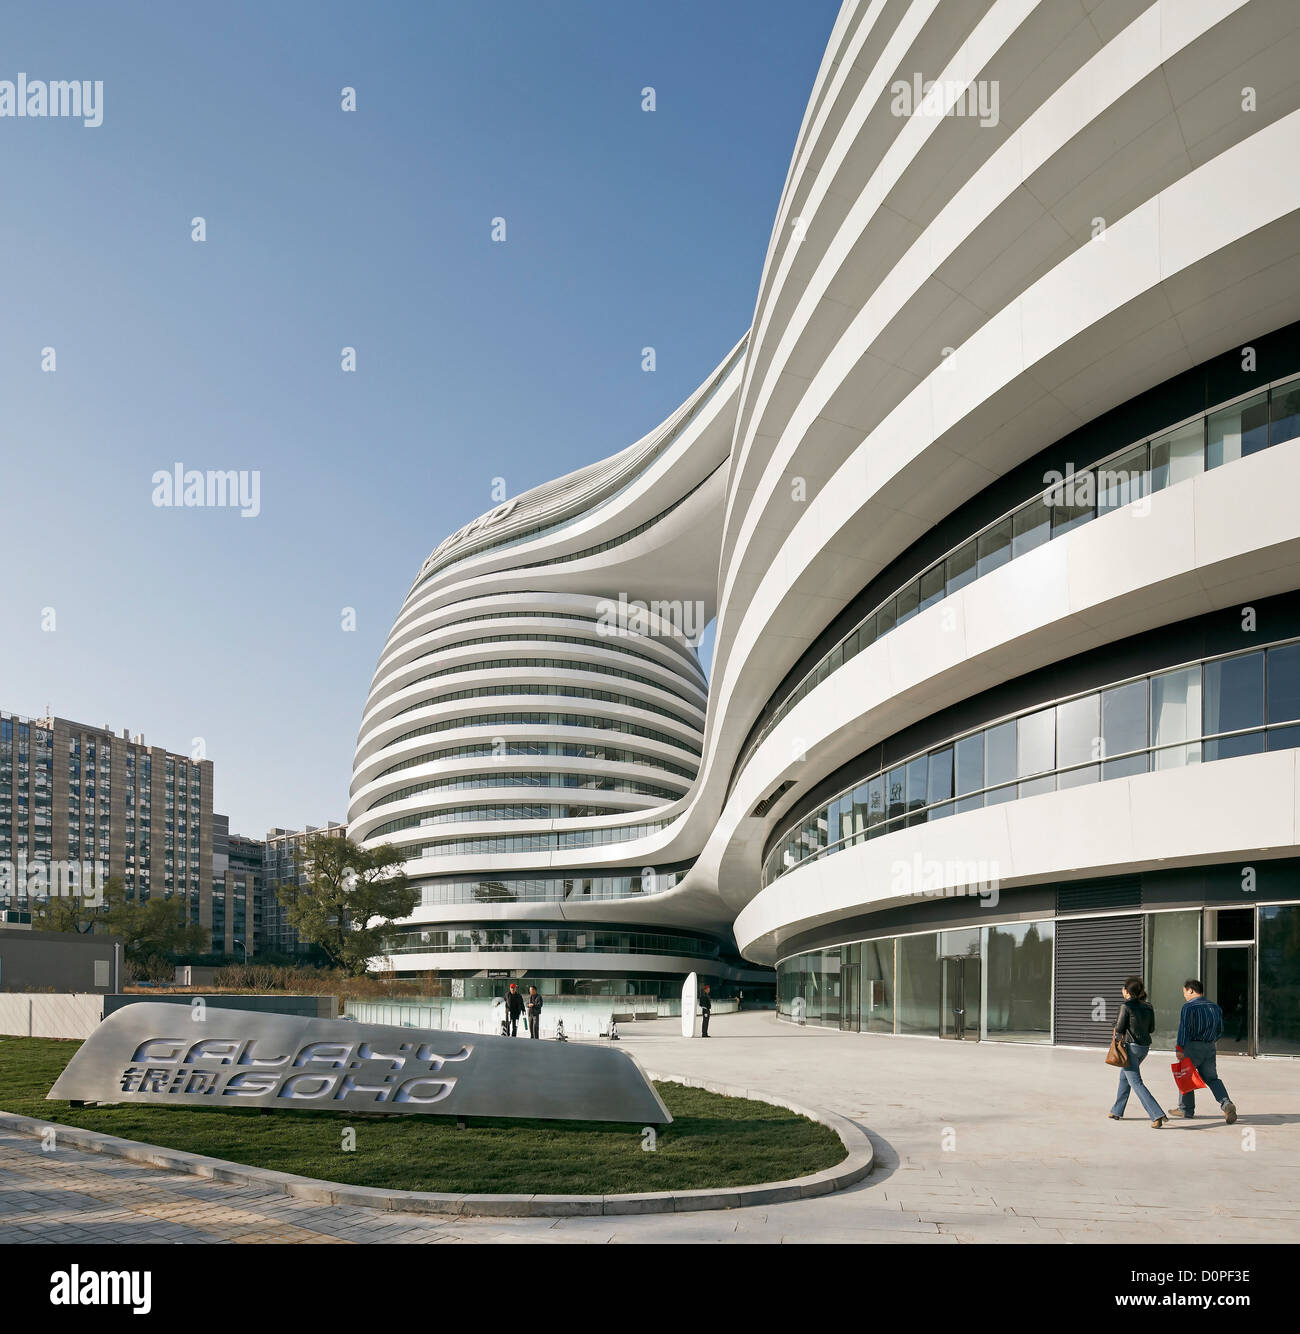 Galaxy Soho, Beijing, Chine. Architecte : Zaha Hadid Architects, 2012. Perspective de la rue et façade avec logo. Banque D'Images